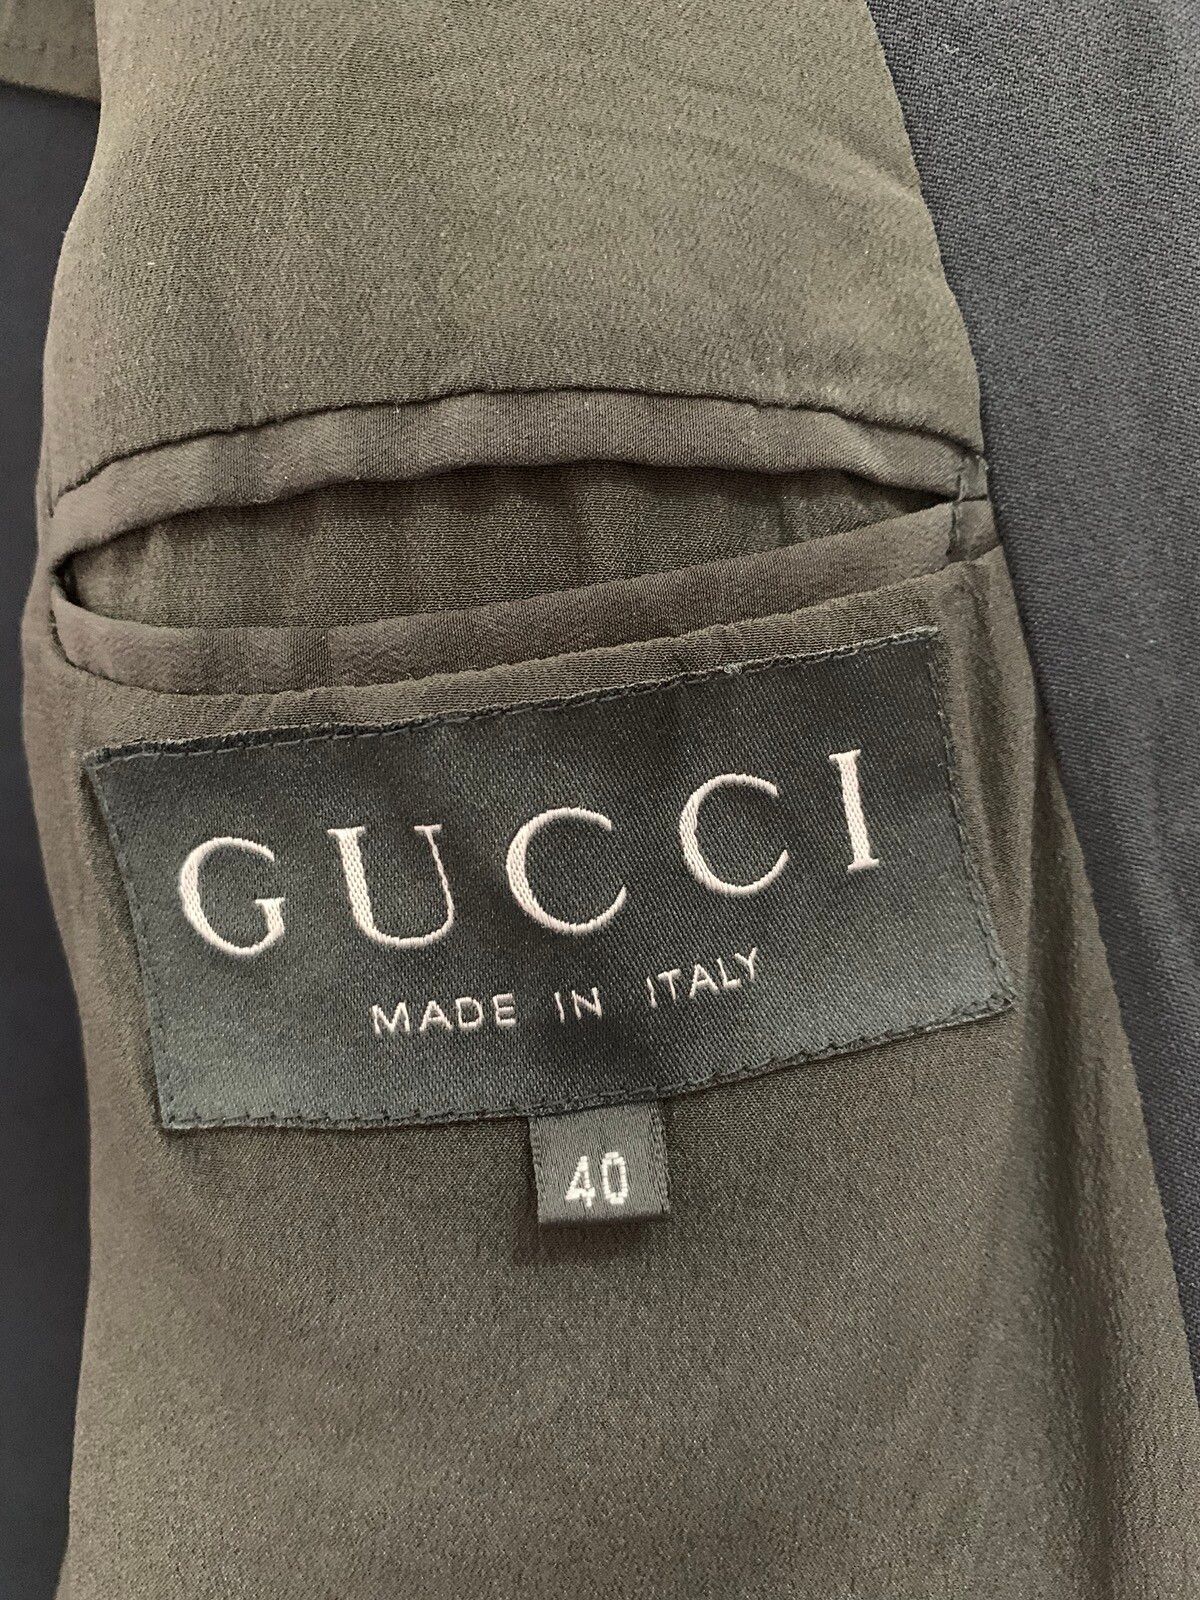 Gucci GUCCI Black Cardigan Blazer Jacket Size US S / EU 44-46 / 1 - 6 Thumbnail